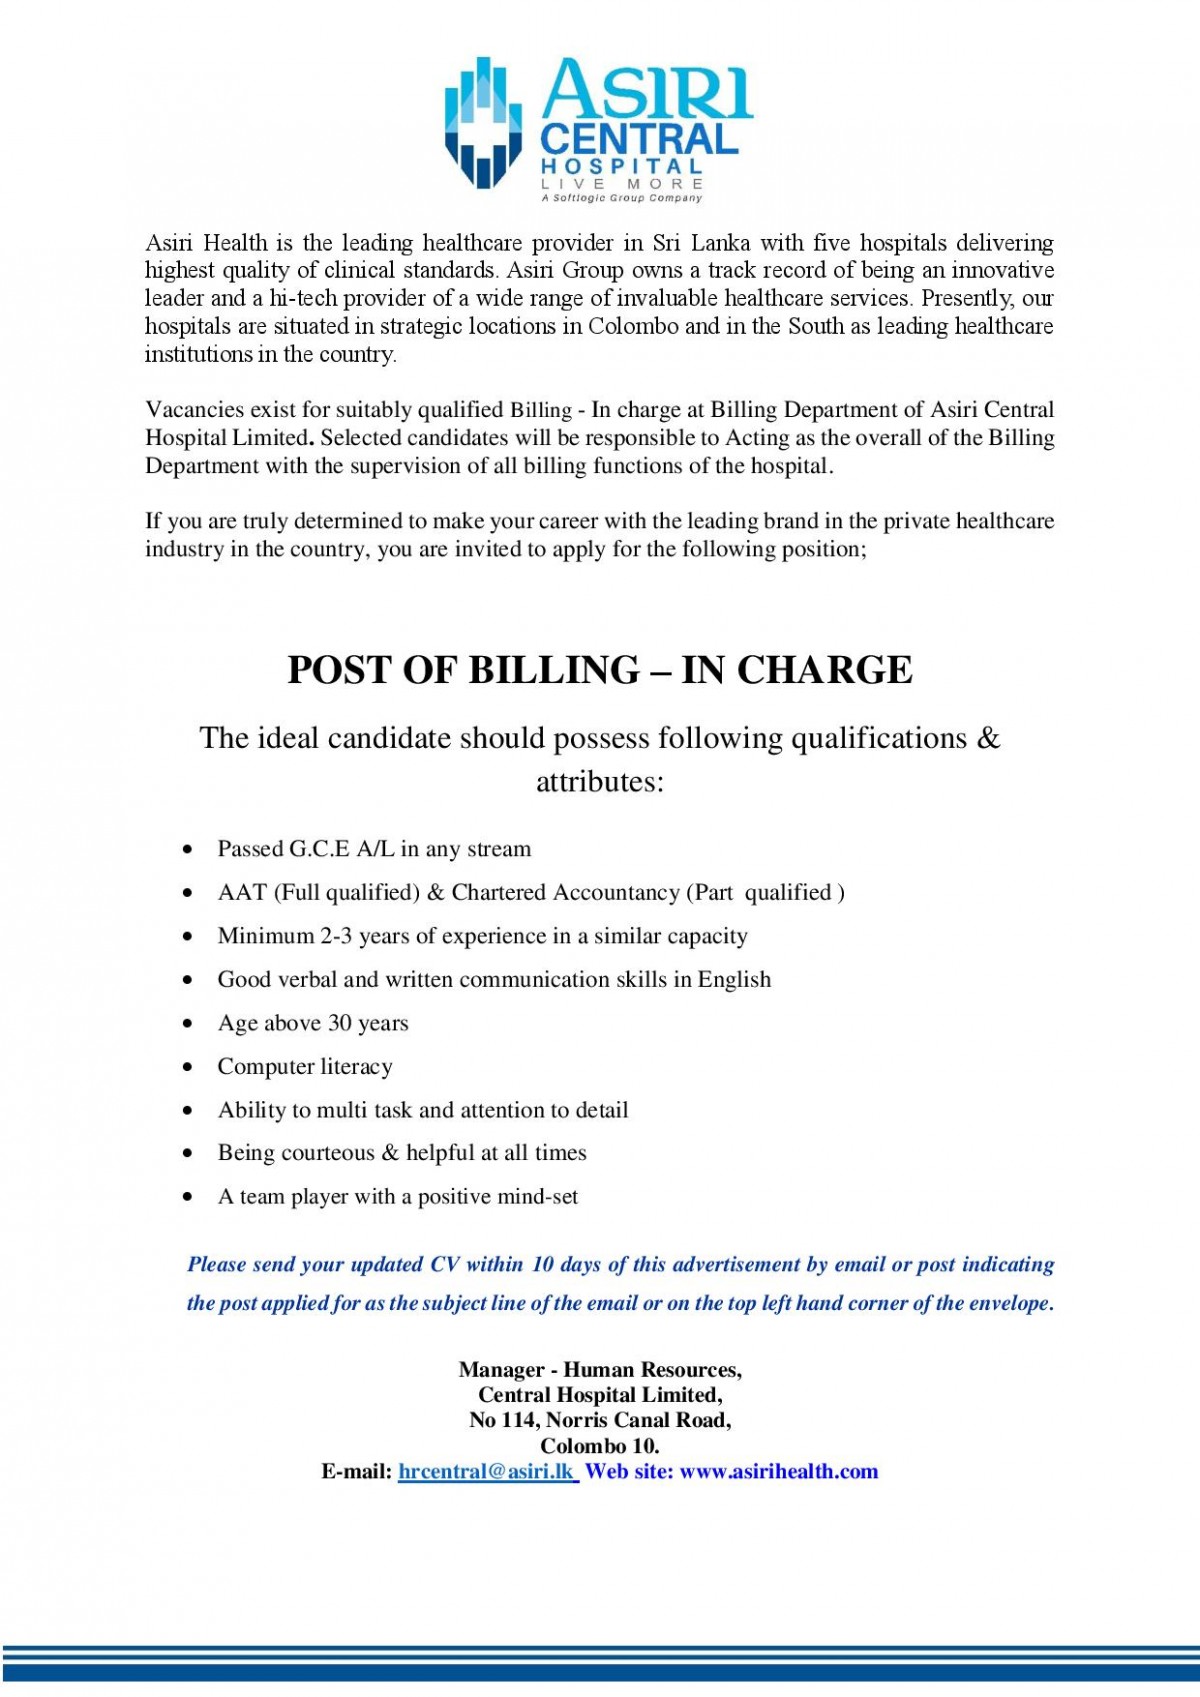 Billing in Charge Jobs Vacancies - Asiri Hospital Sri Lanka Job Vacancy Details